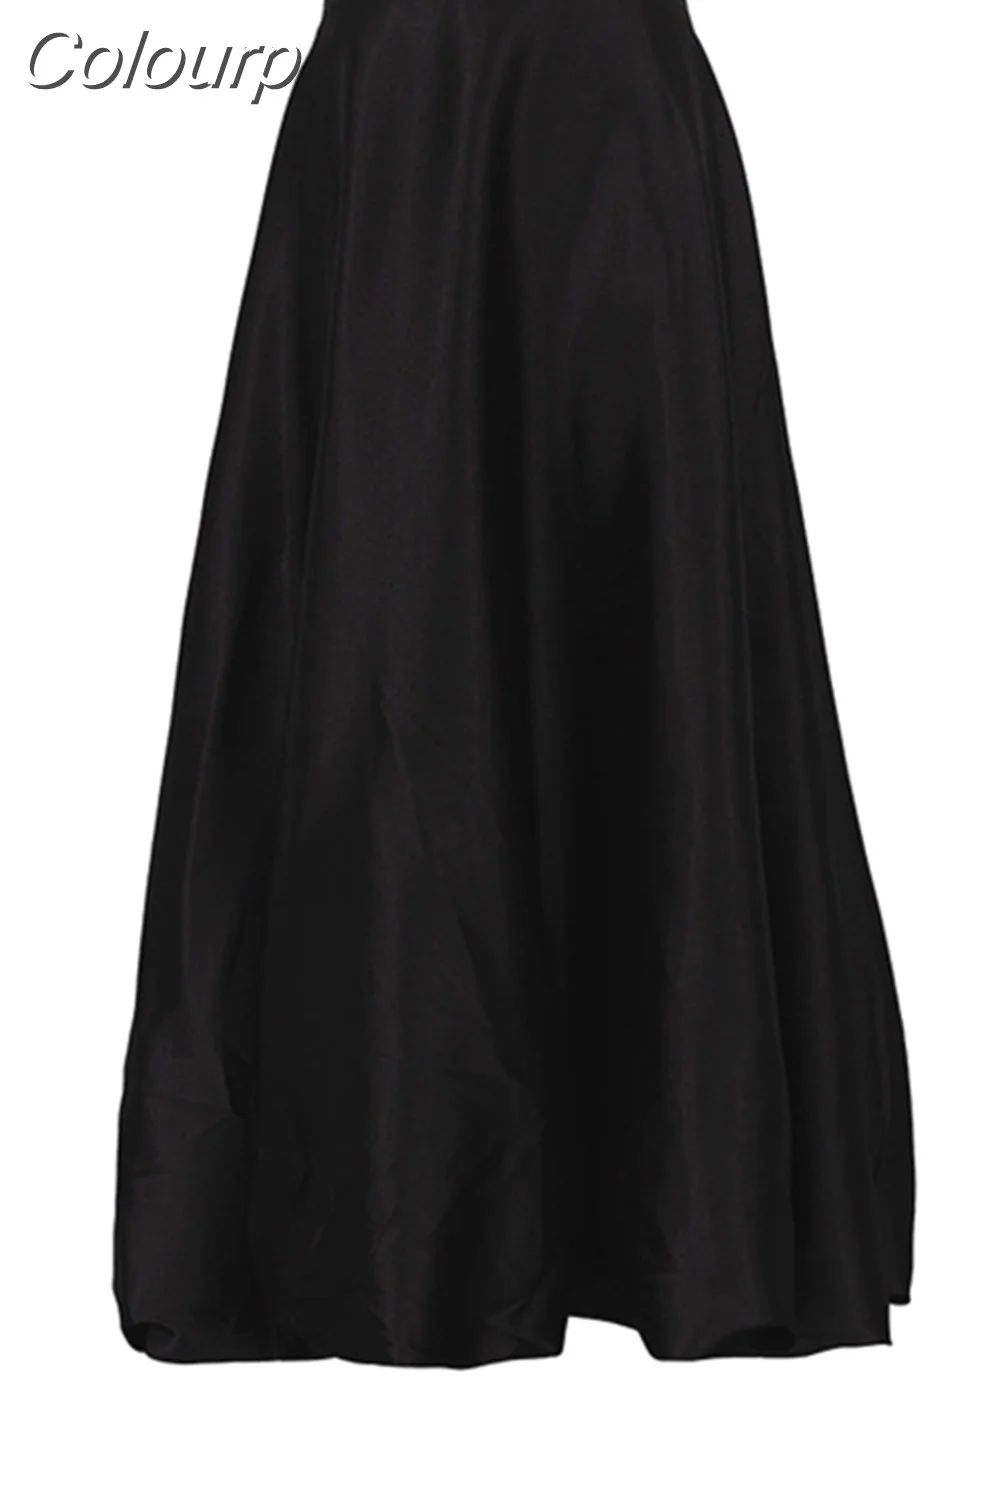 Colourp Spring Summer Women Satin High Waist A-line Drape Skirt Fashion Elegant Solid Color Zipper Simple French Tutu Skirts